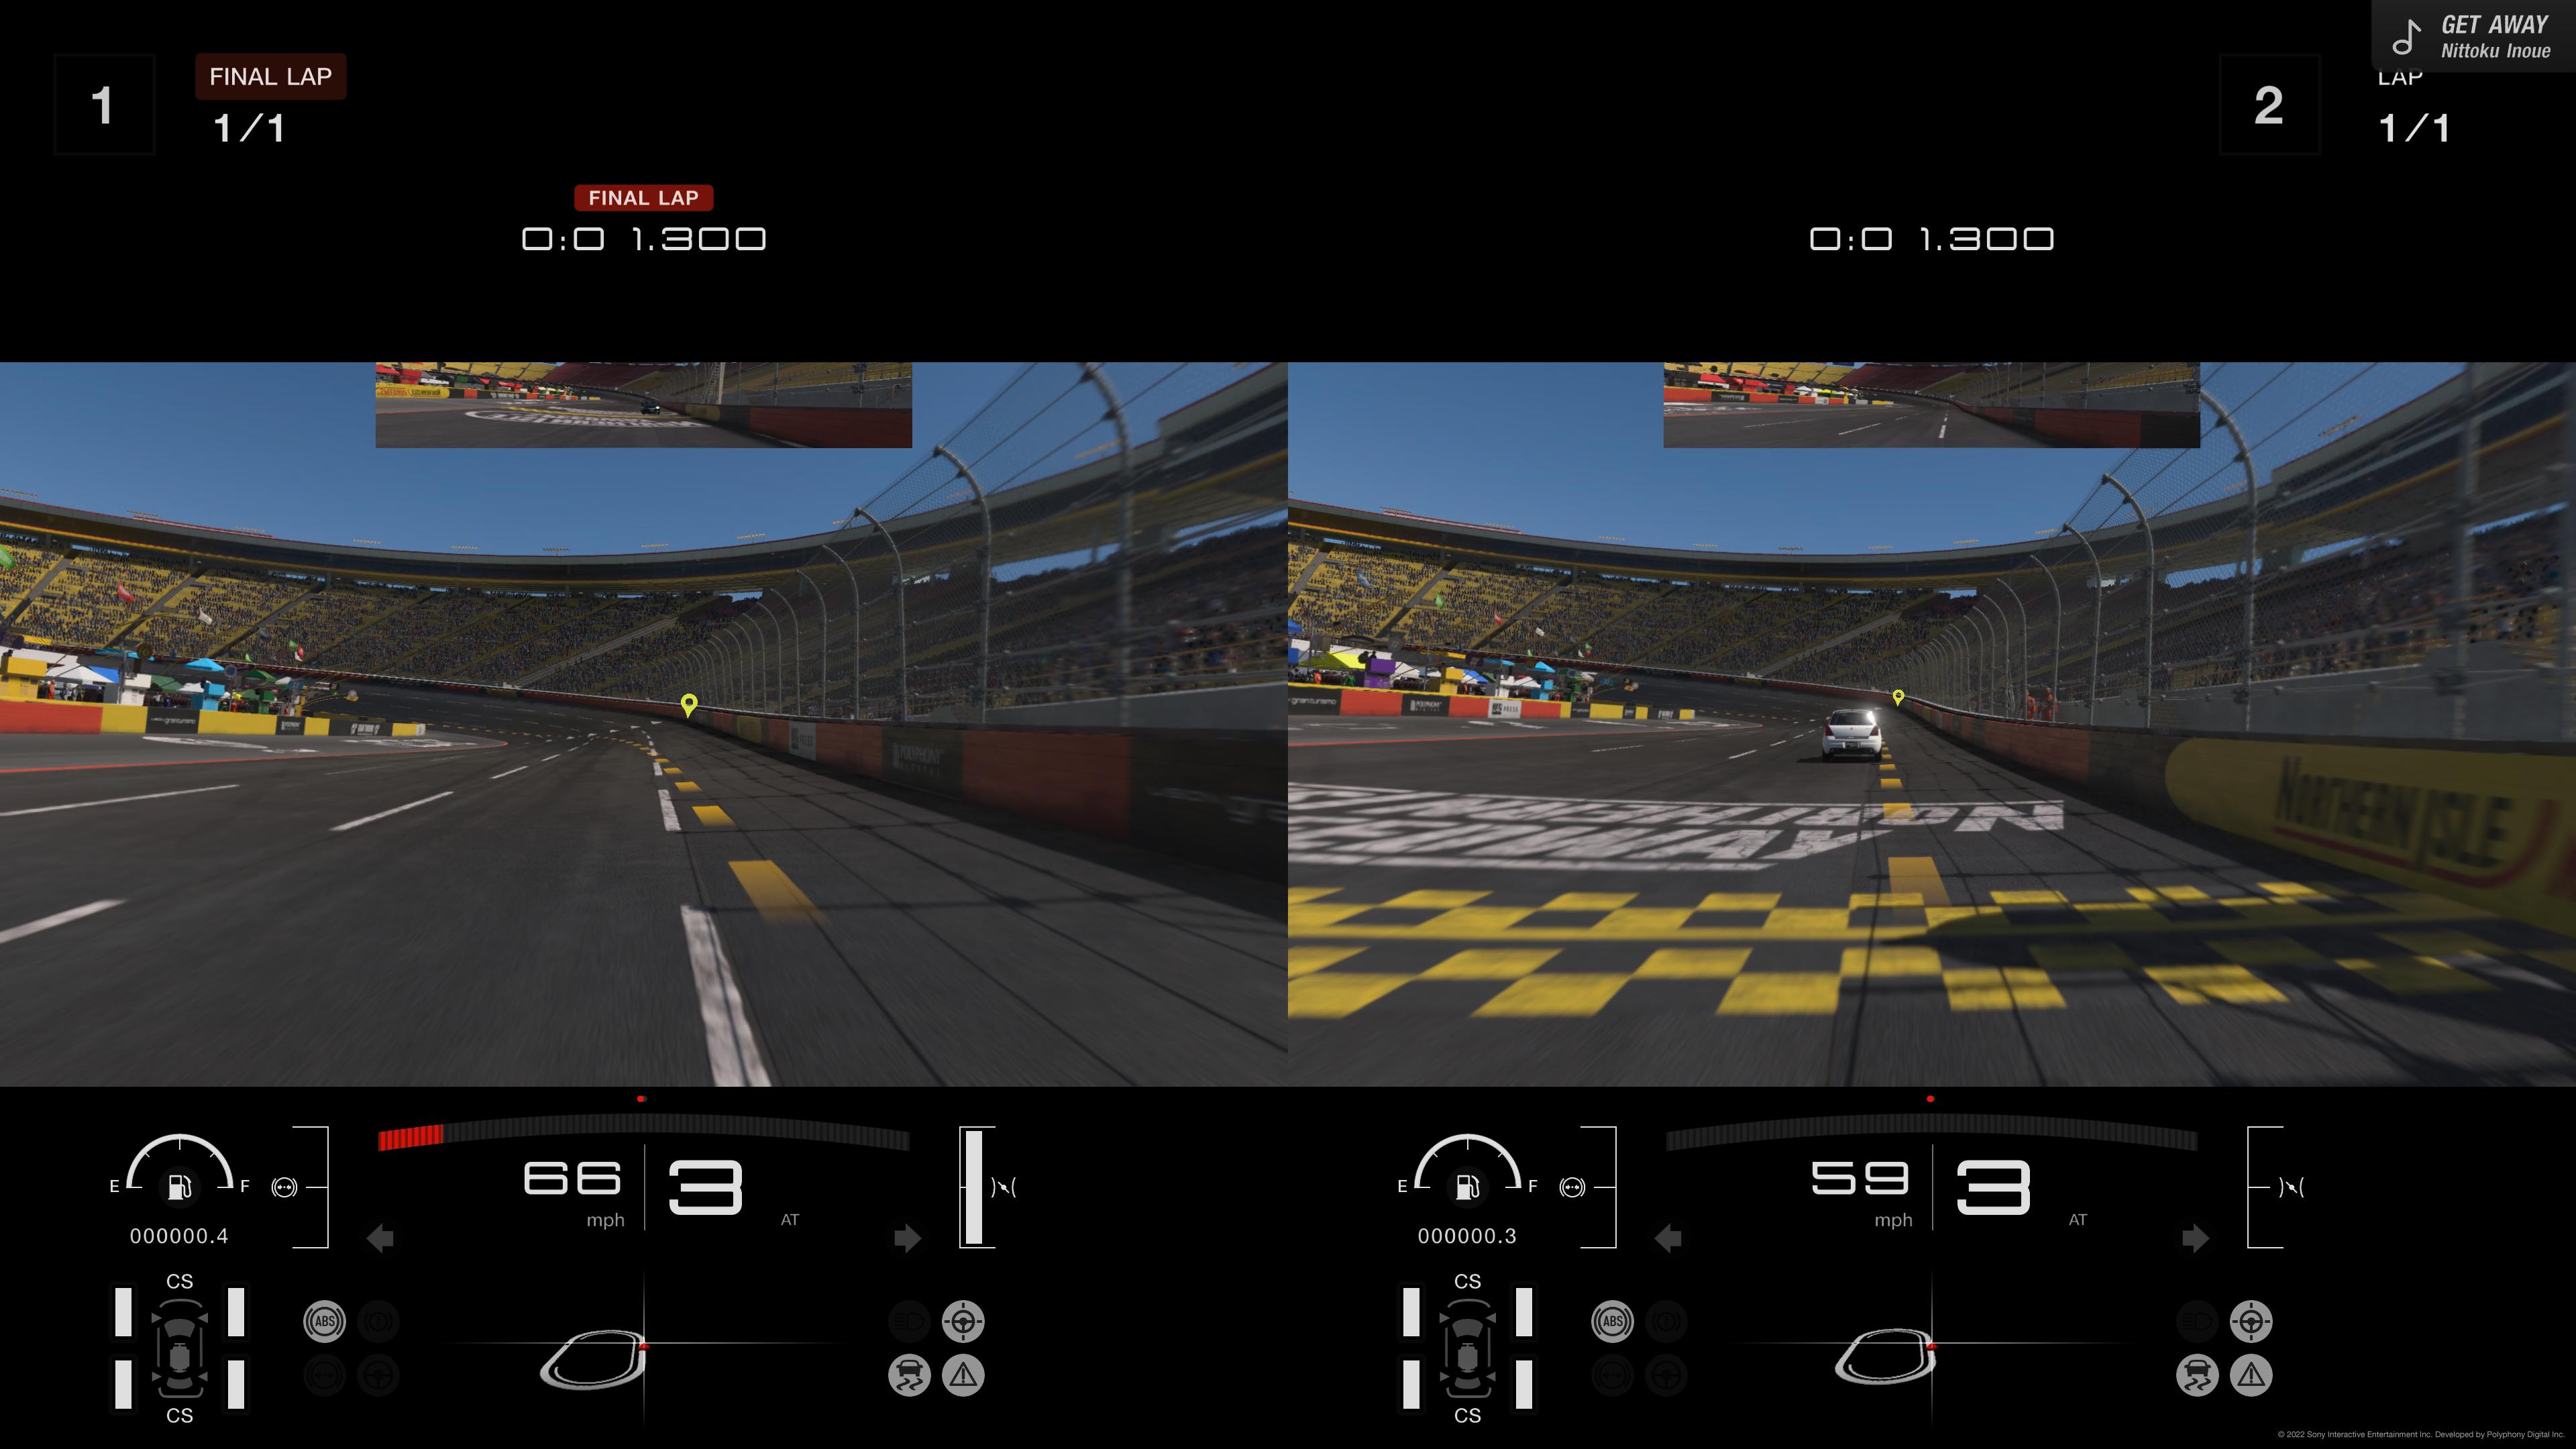 Haiku Arbejdsløs Mange How to play split screen in Gran Turismo 7 | GGRecon